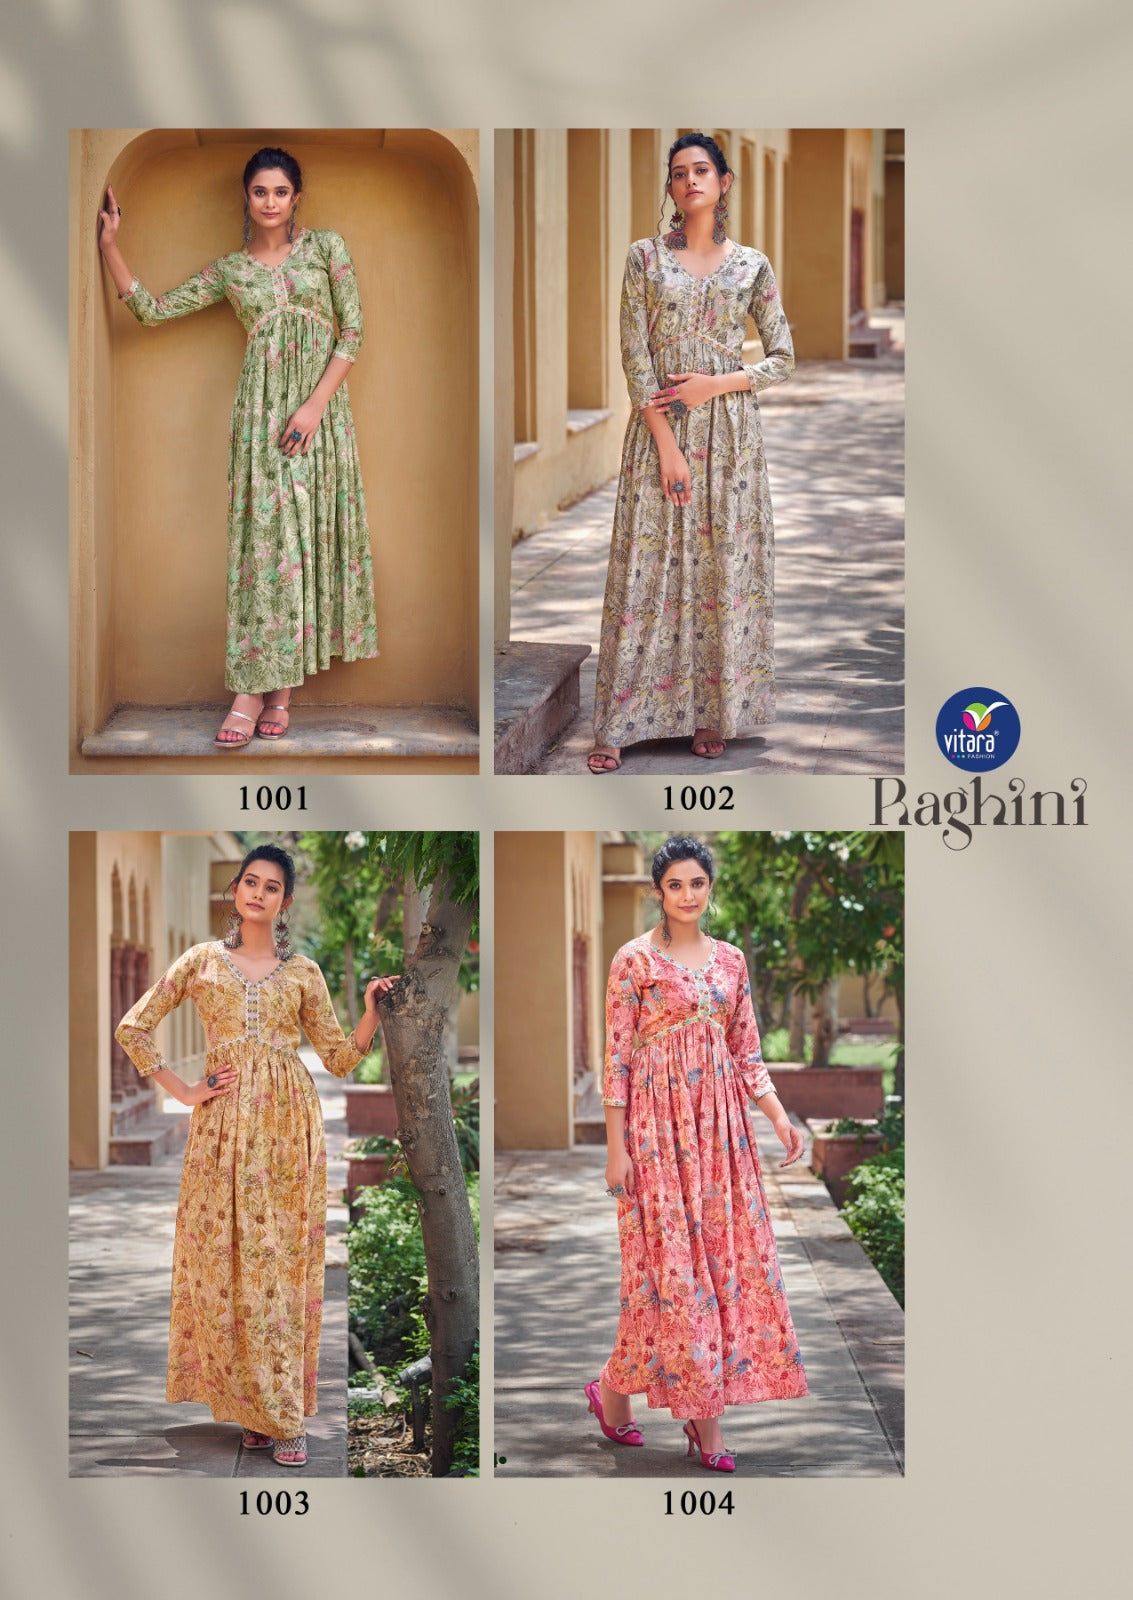 Vitara Raghini Alia Cut Rayon Gown 1003